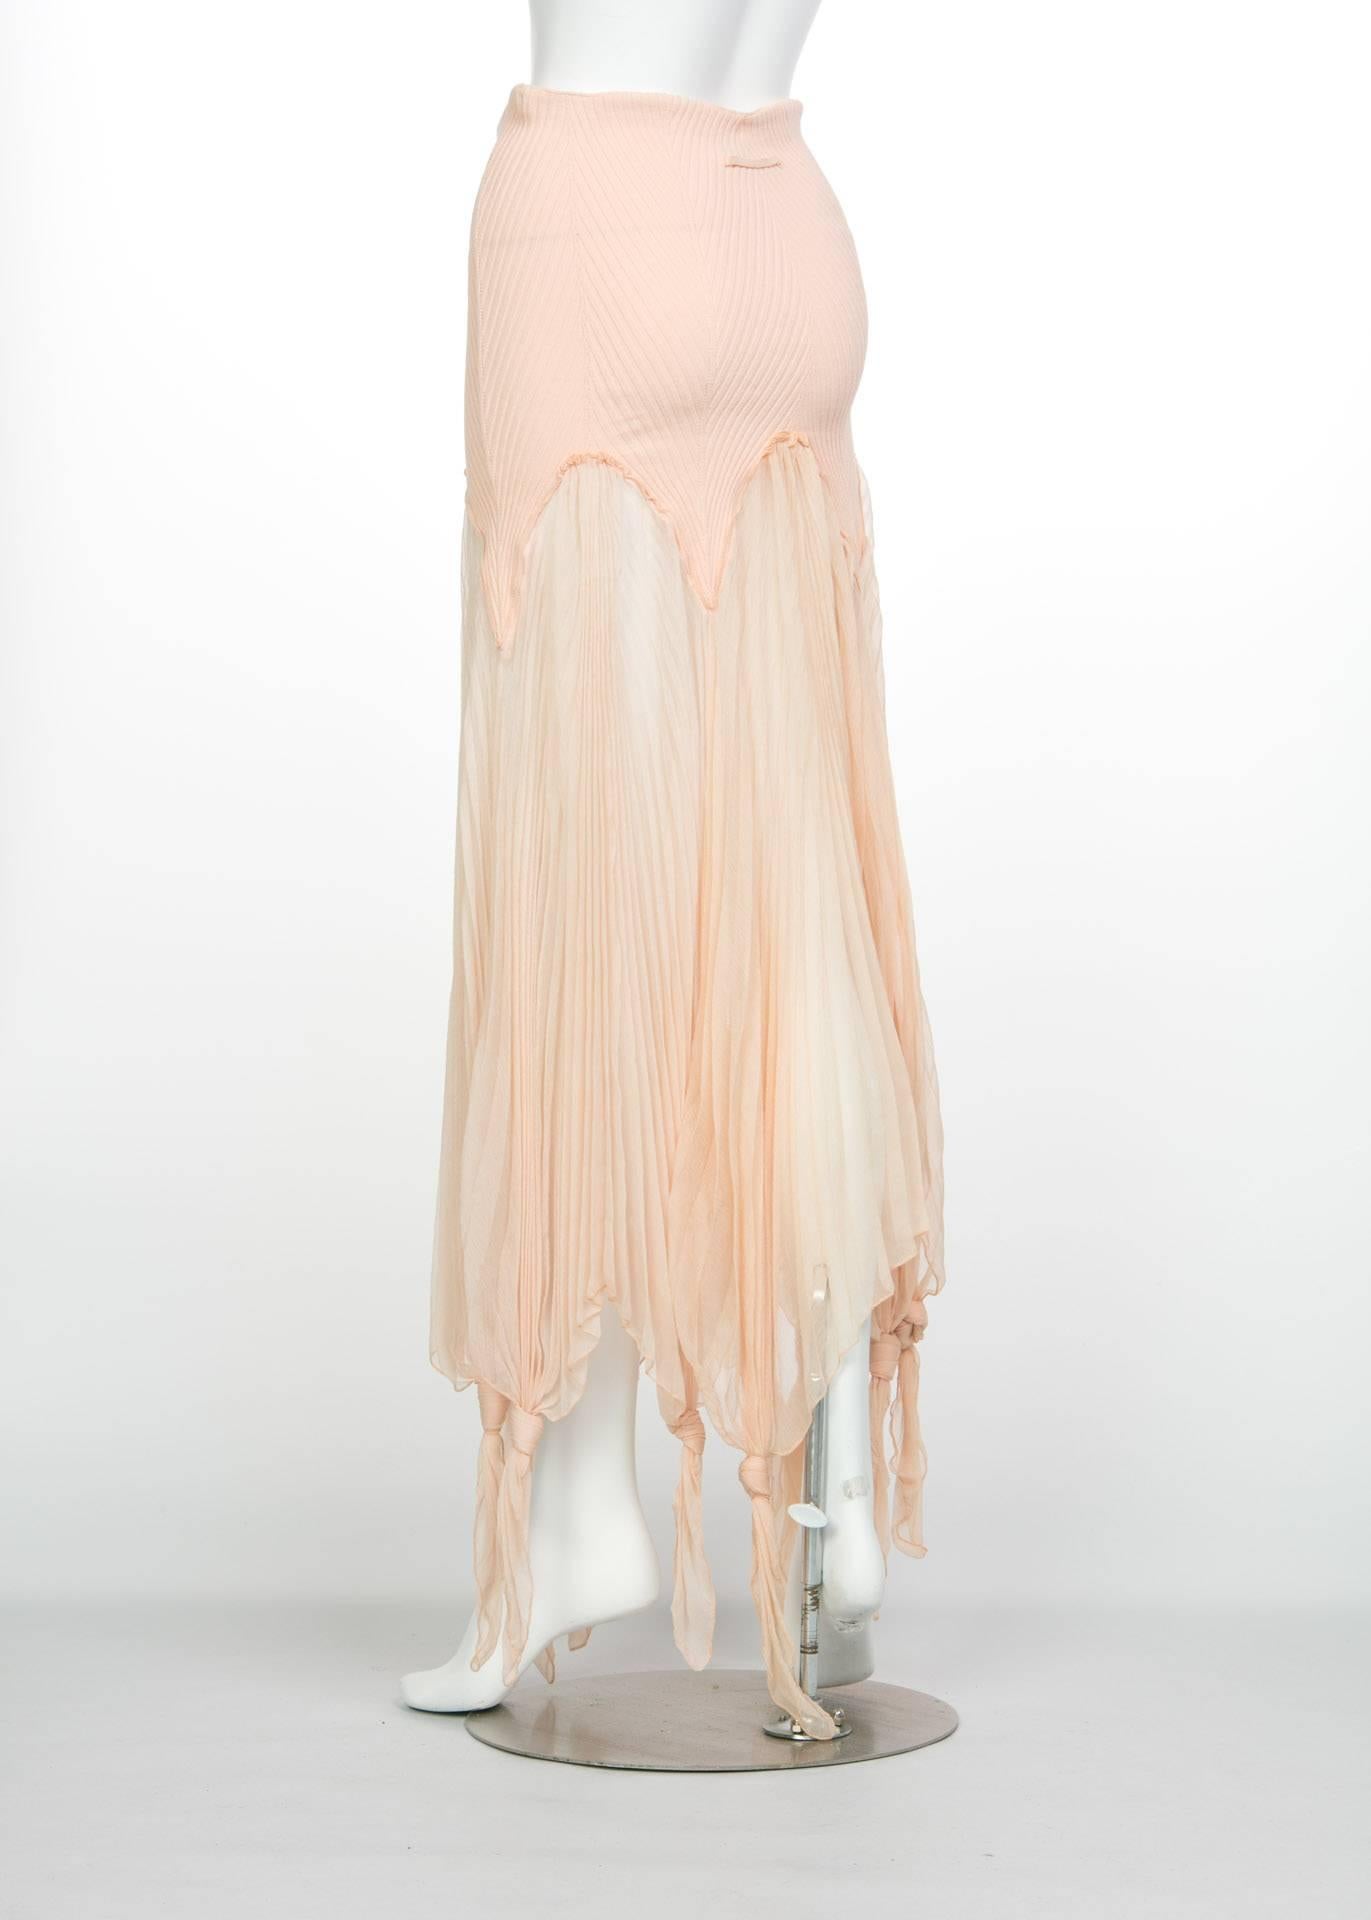 Women's Jean Paul Gaultier Blush Crinkle Silk Chiffon Rib Knit Yoke Skirt, 2000s